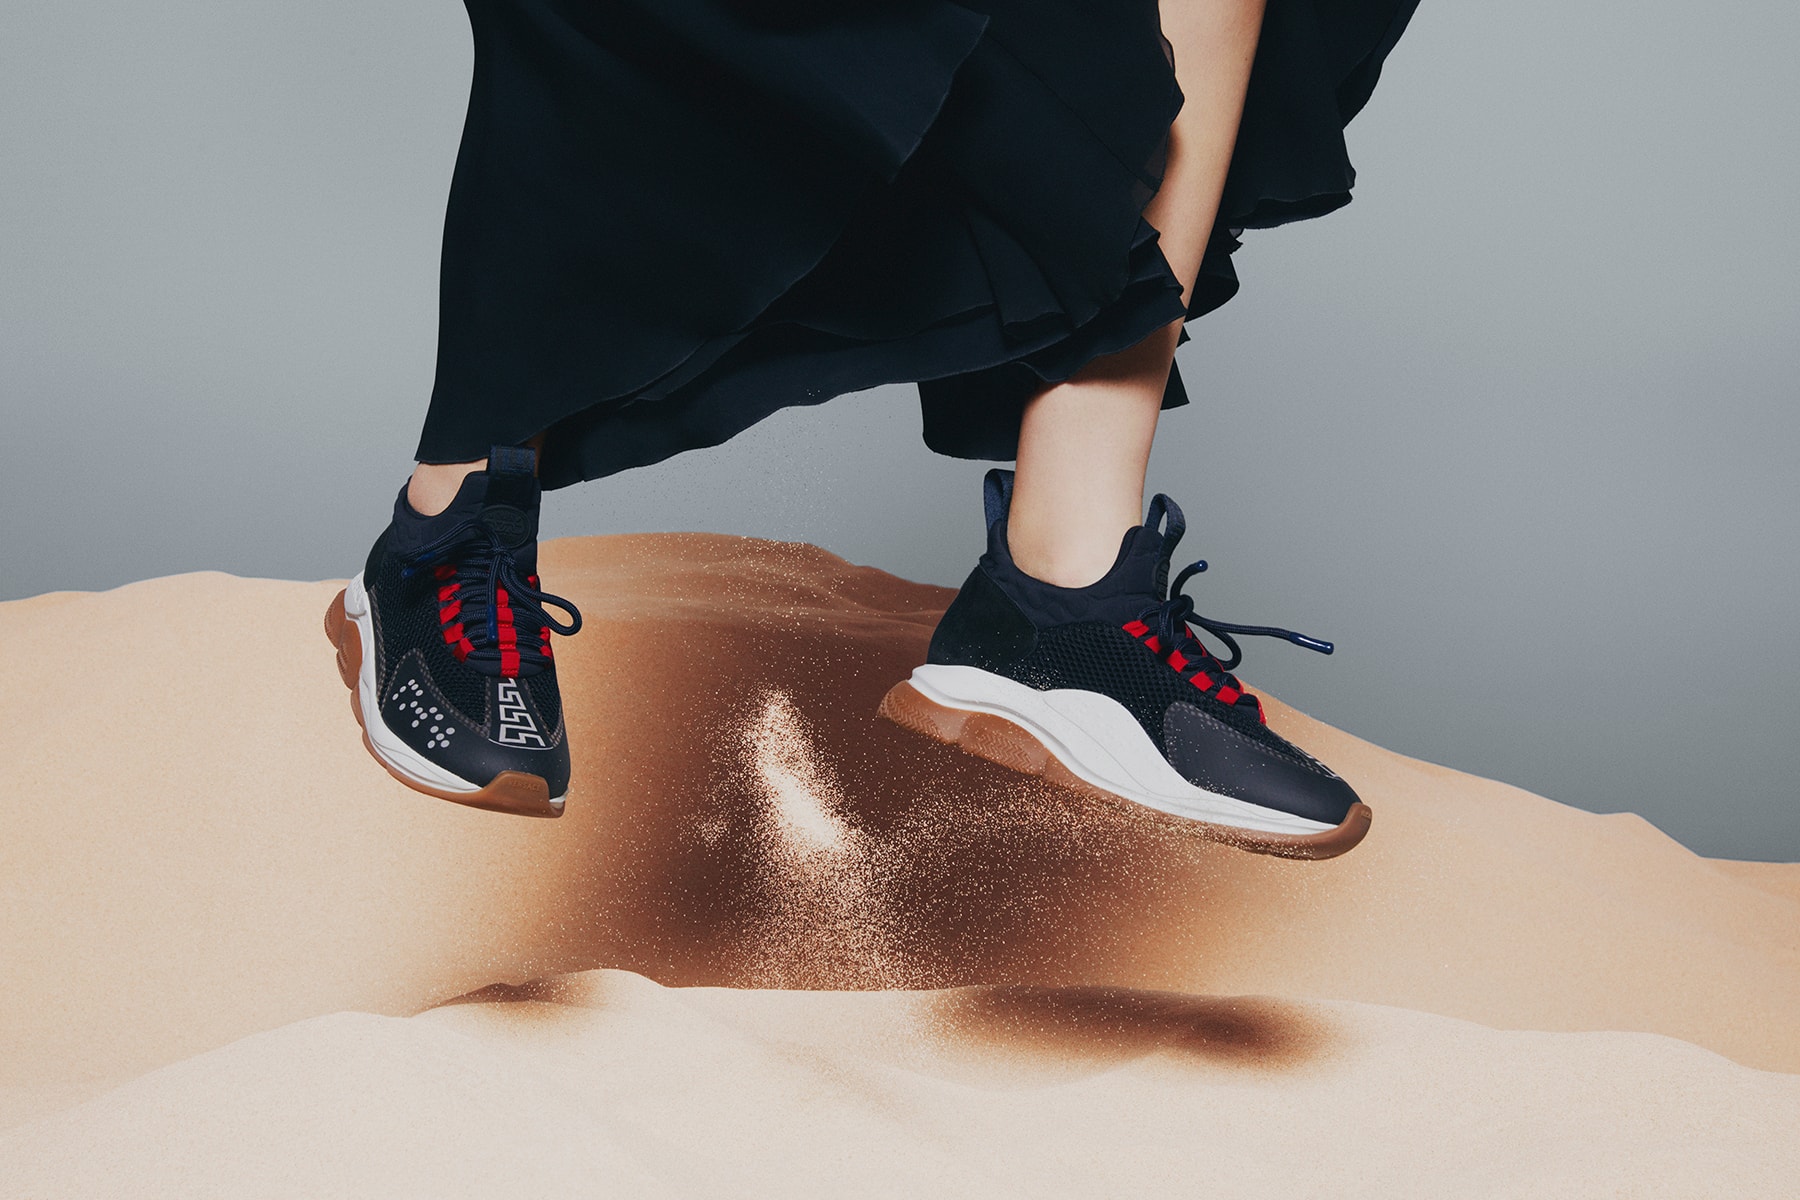 Chain Reaction 家族新成員参上 - Versace 推出全新 Cross Chainer 運動鞋